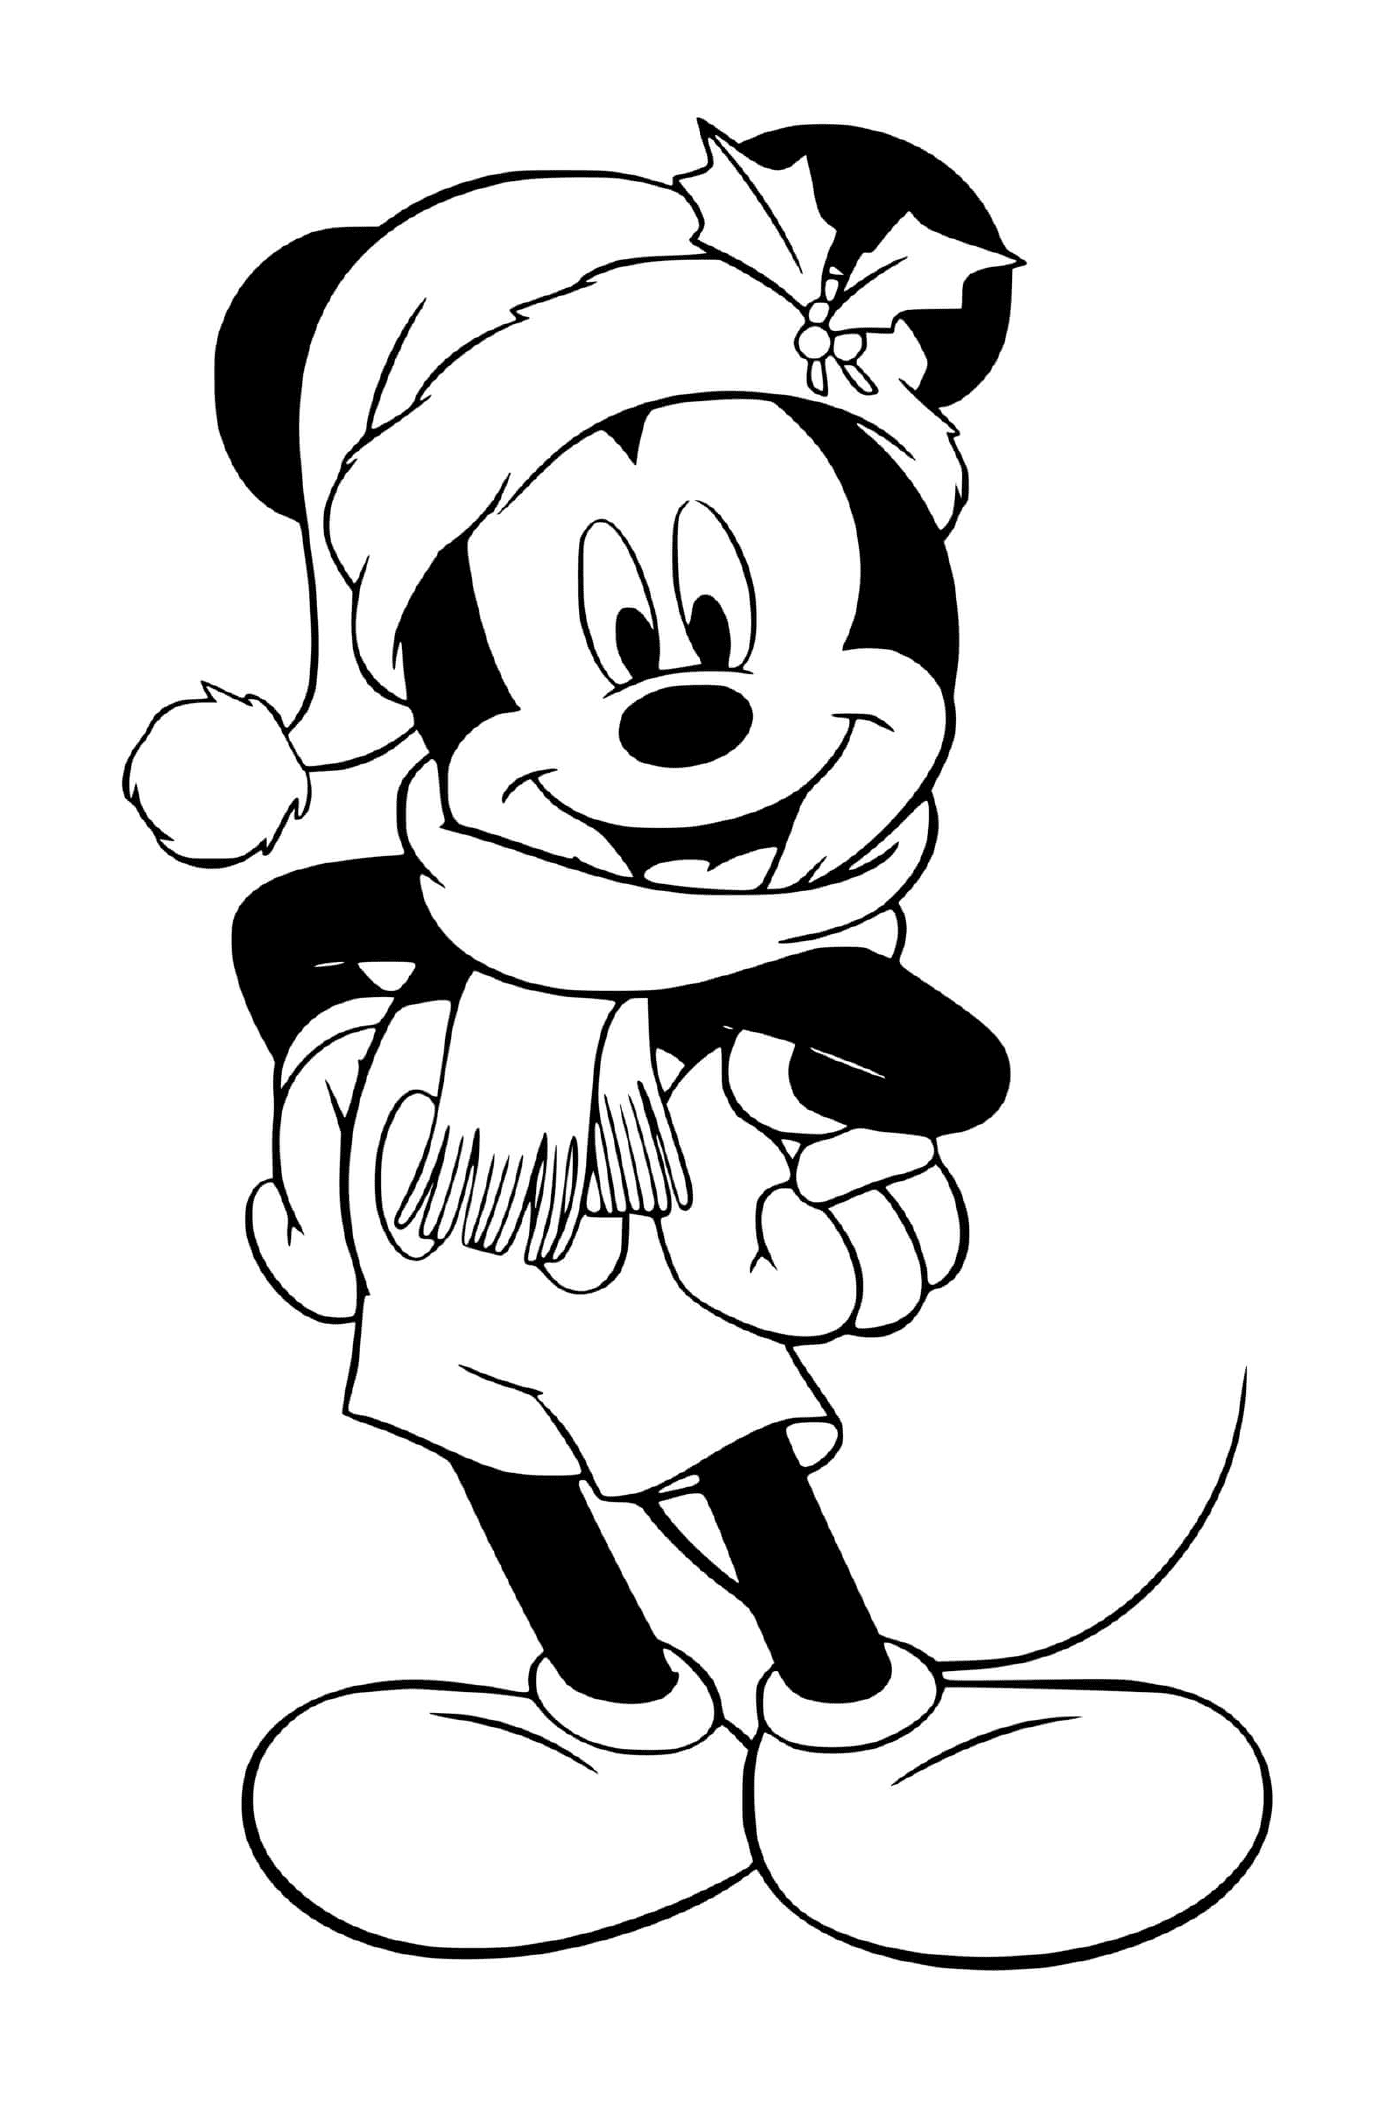  Mickey com um chapéu de Papai Noel 